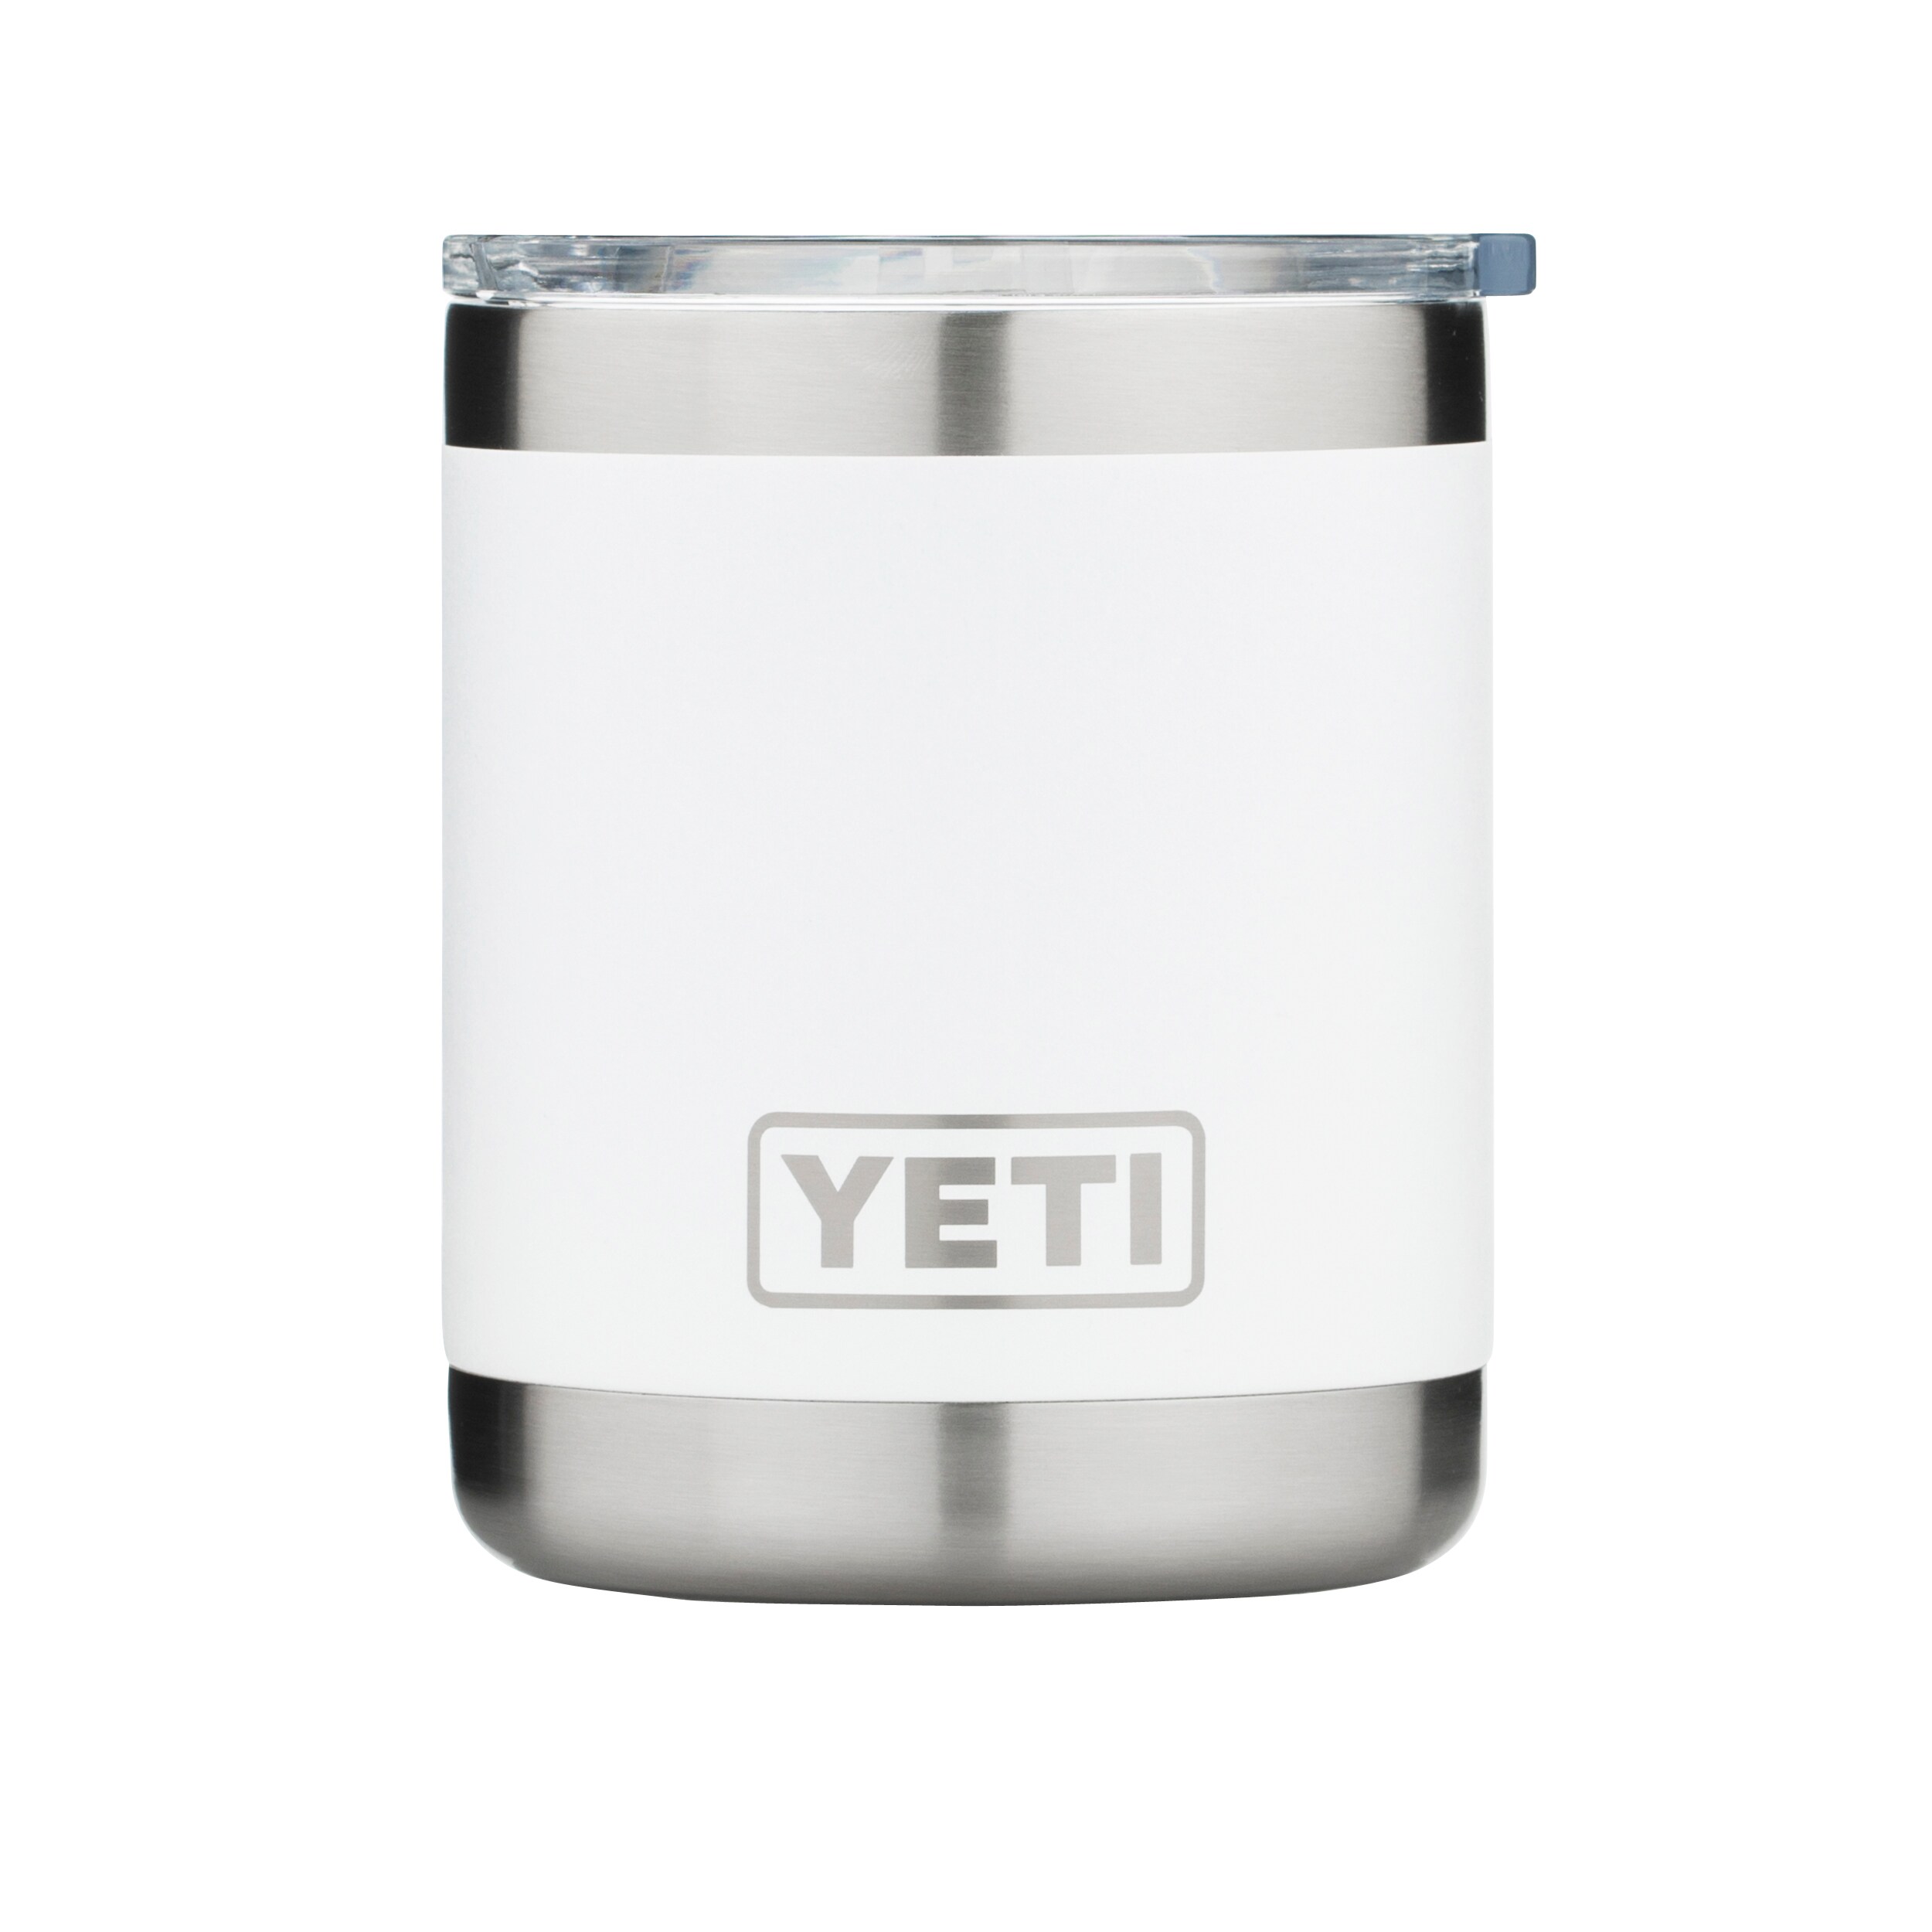 YETI Rambler 10-fl oz Stainless Steel Lowball in the Water Bottles 